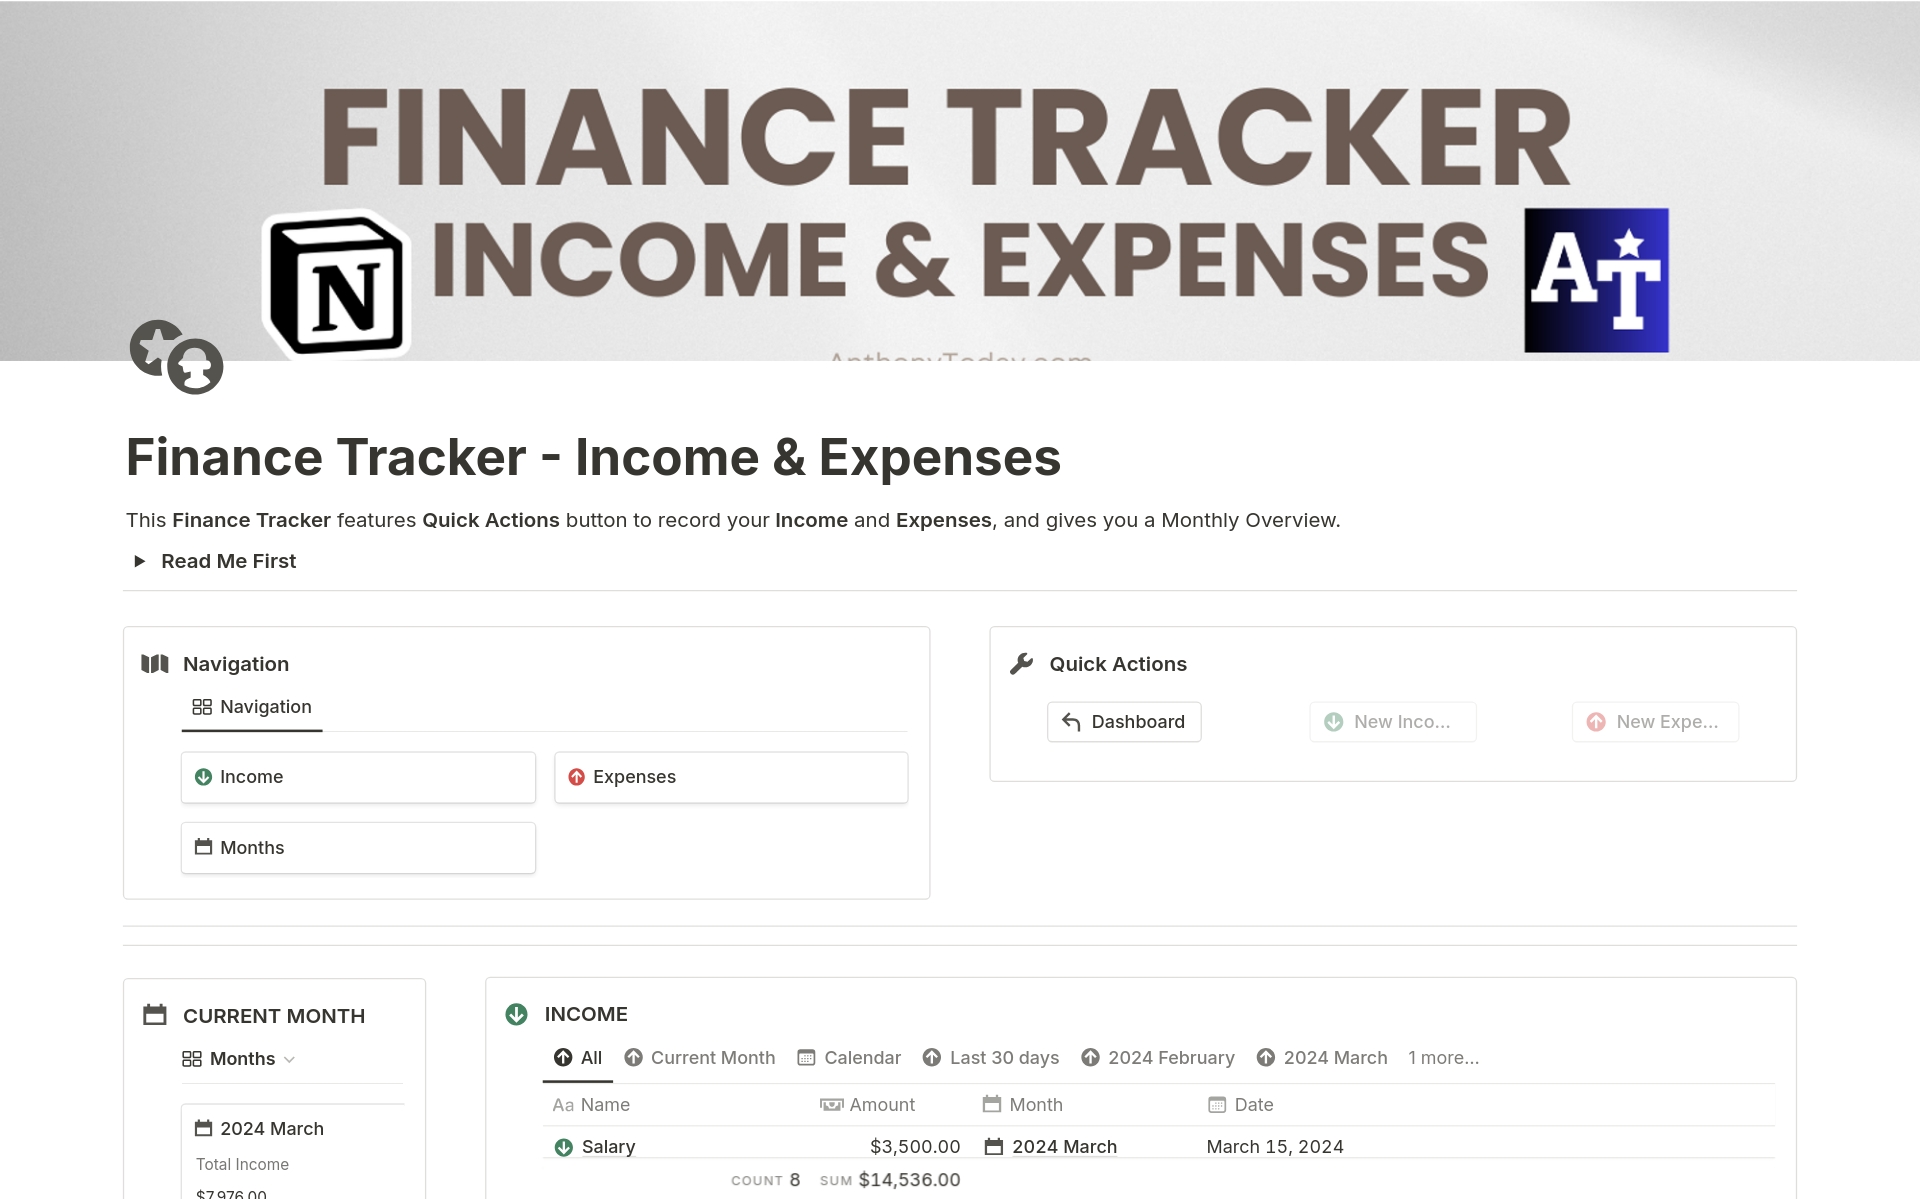 Aperçu du modèle de Finance Tracker - Income and Expenses